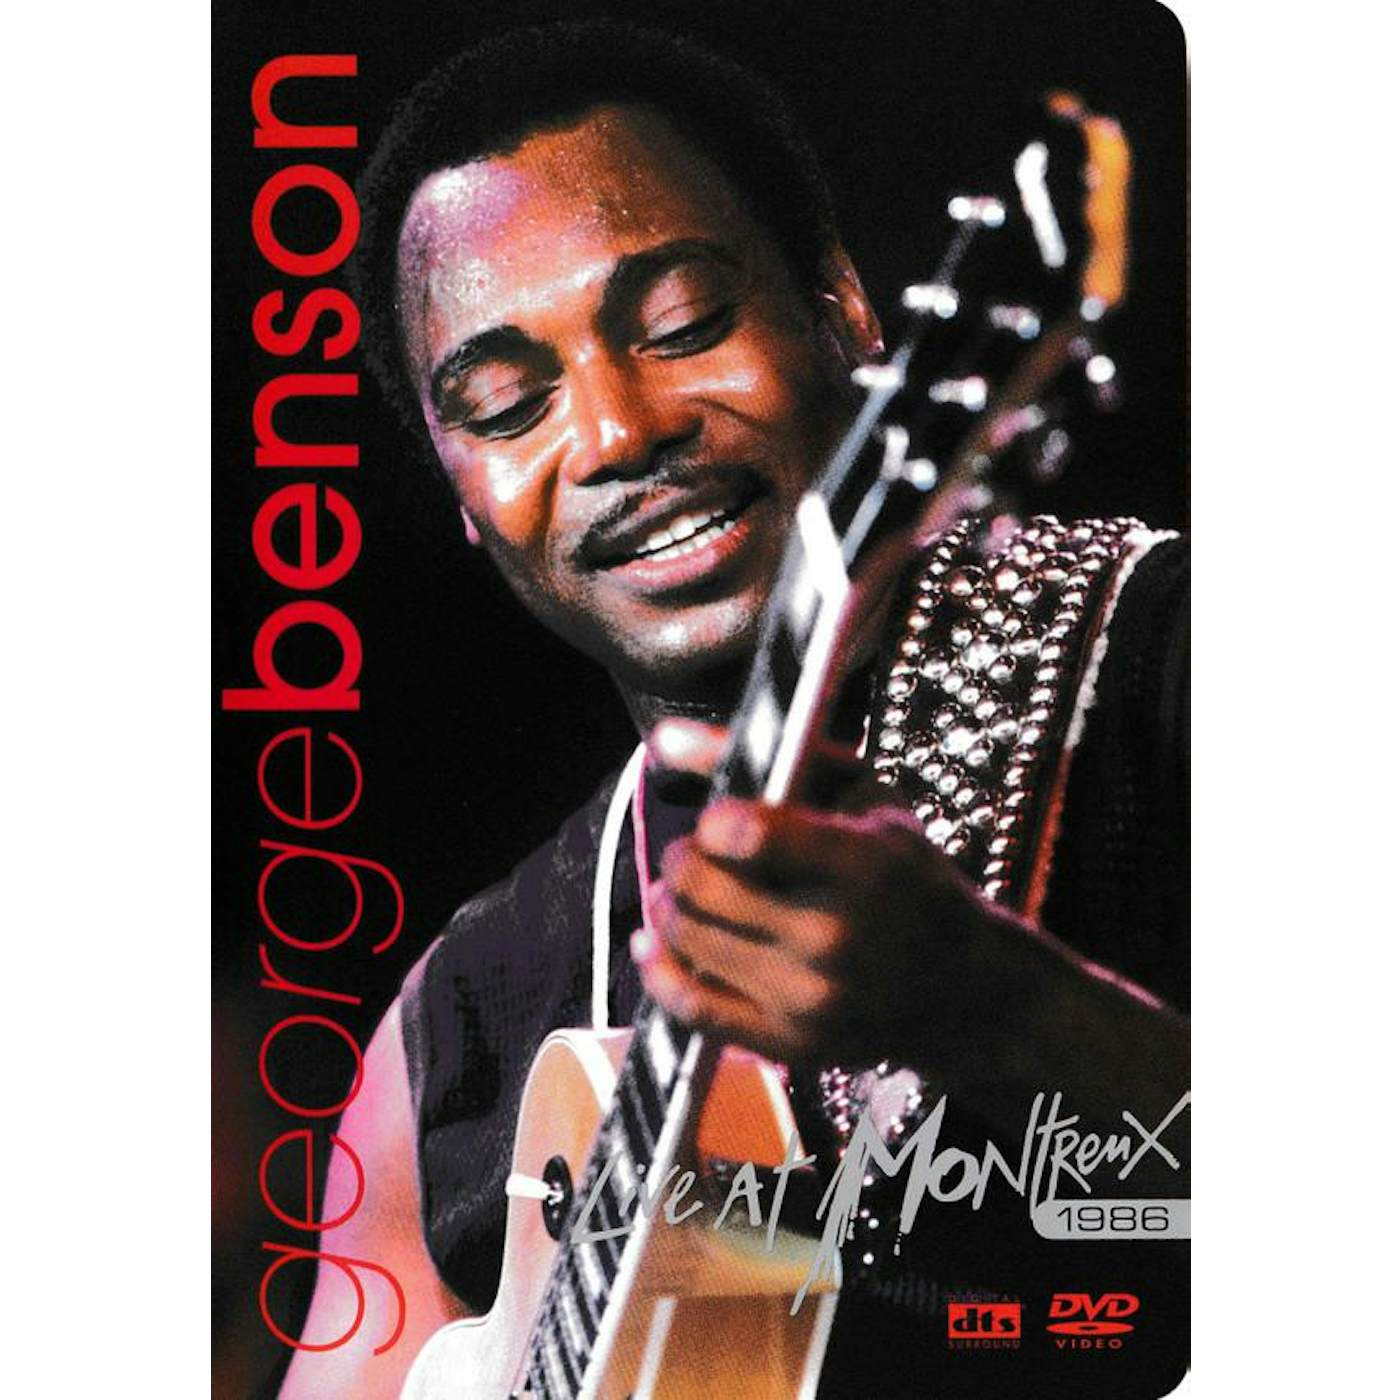 George Benson LIVE AT MONTREUX 1986 (2CD/DVD) CD